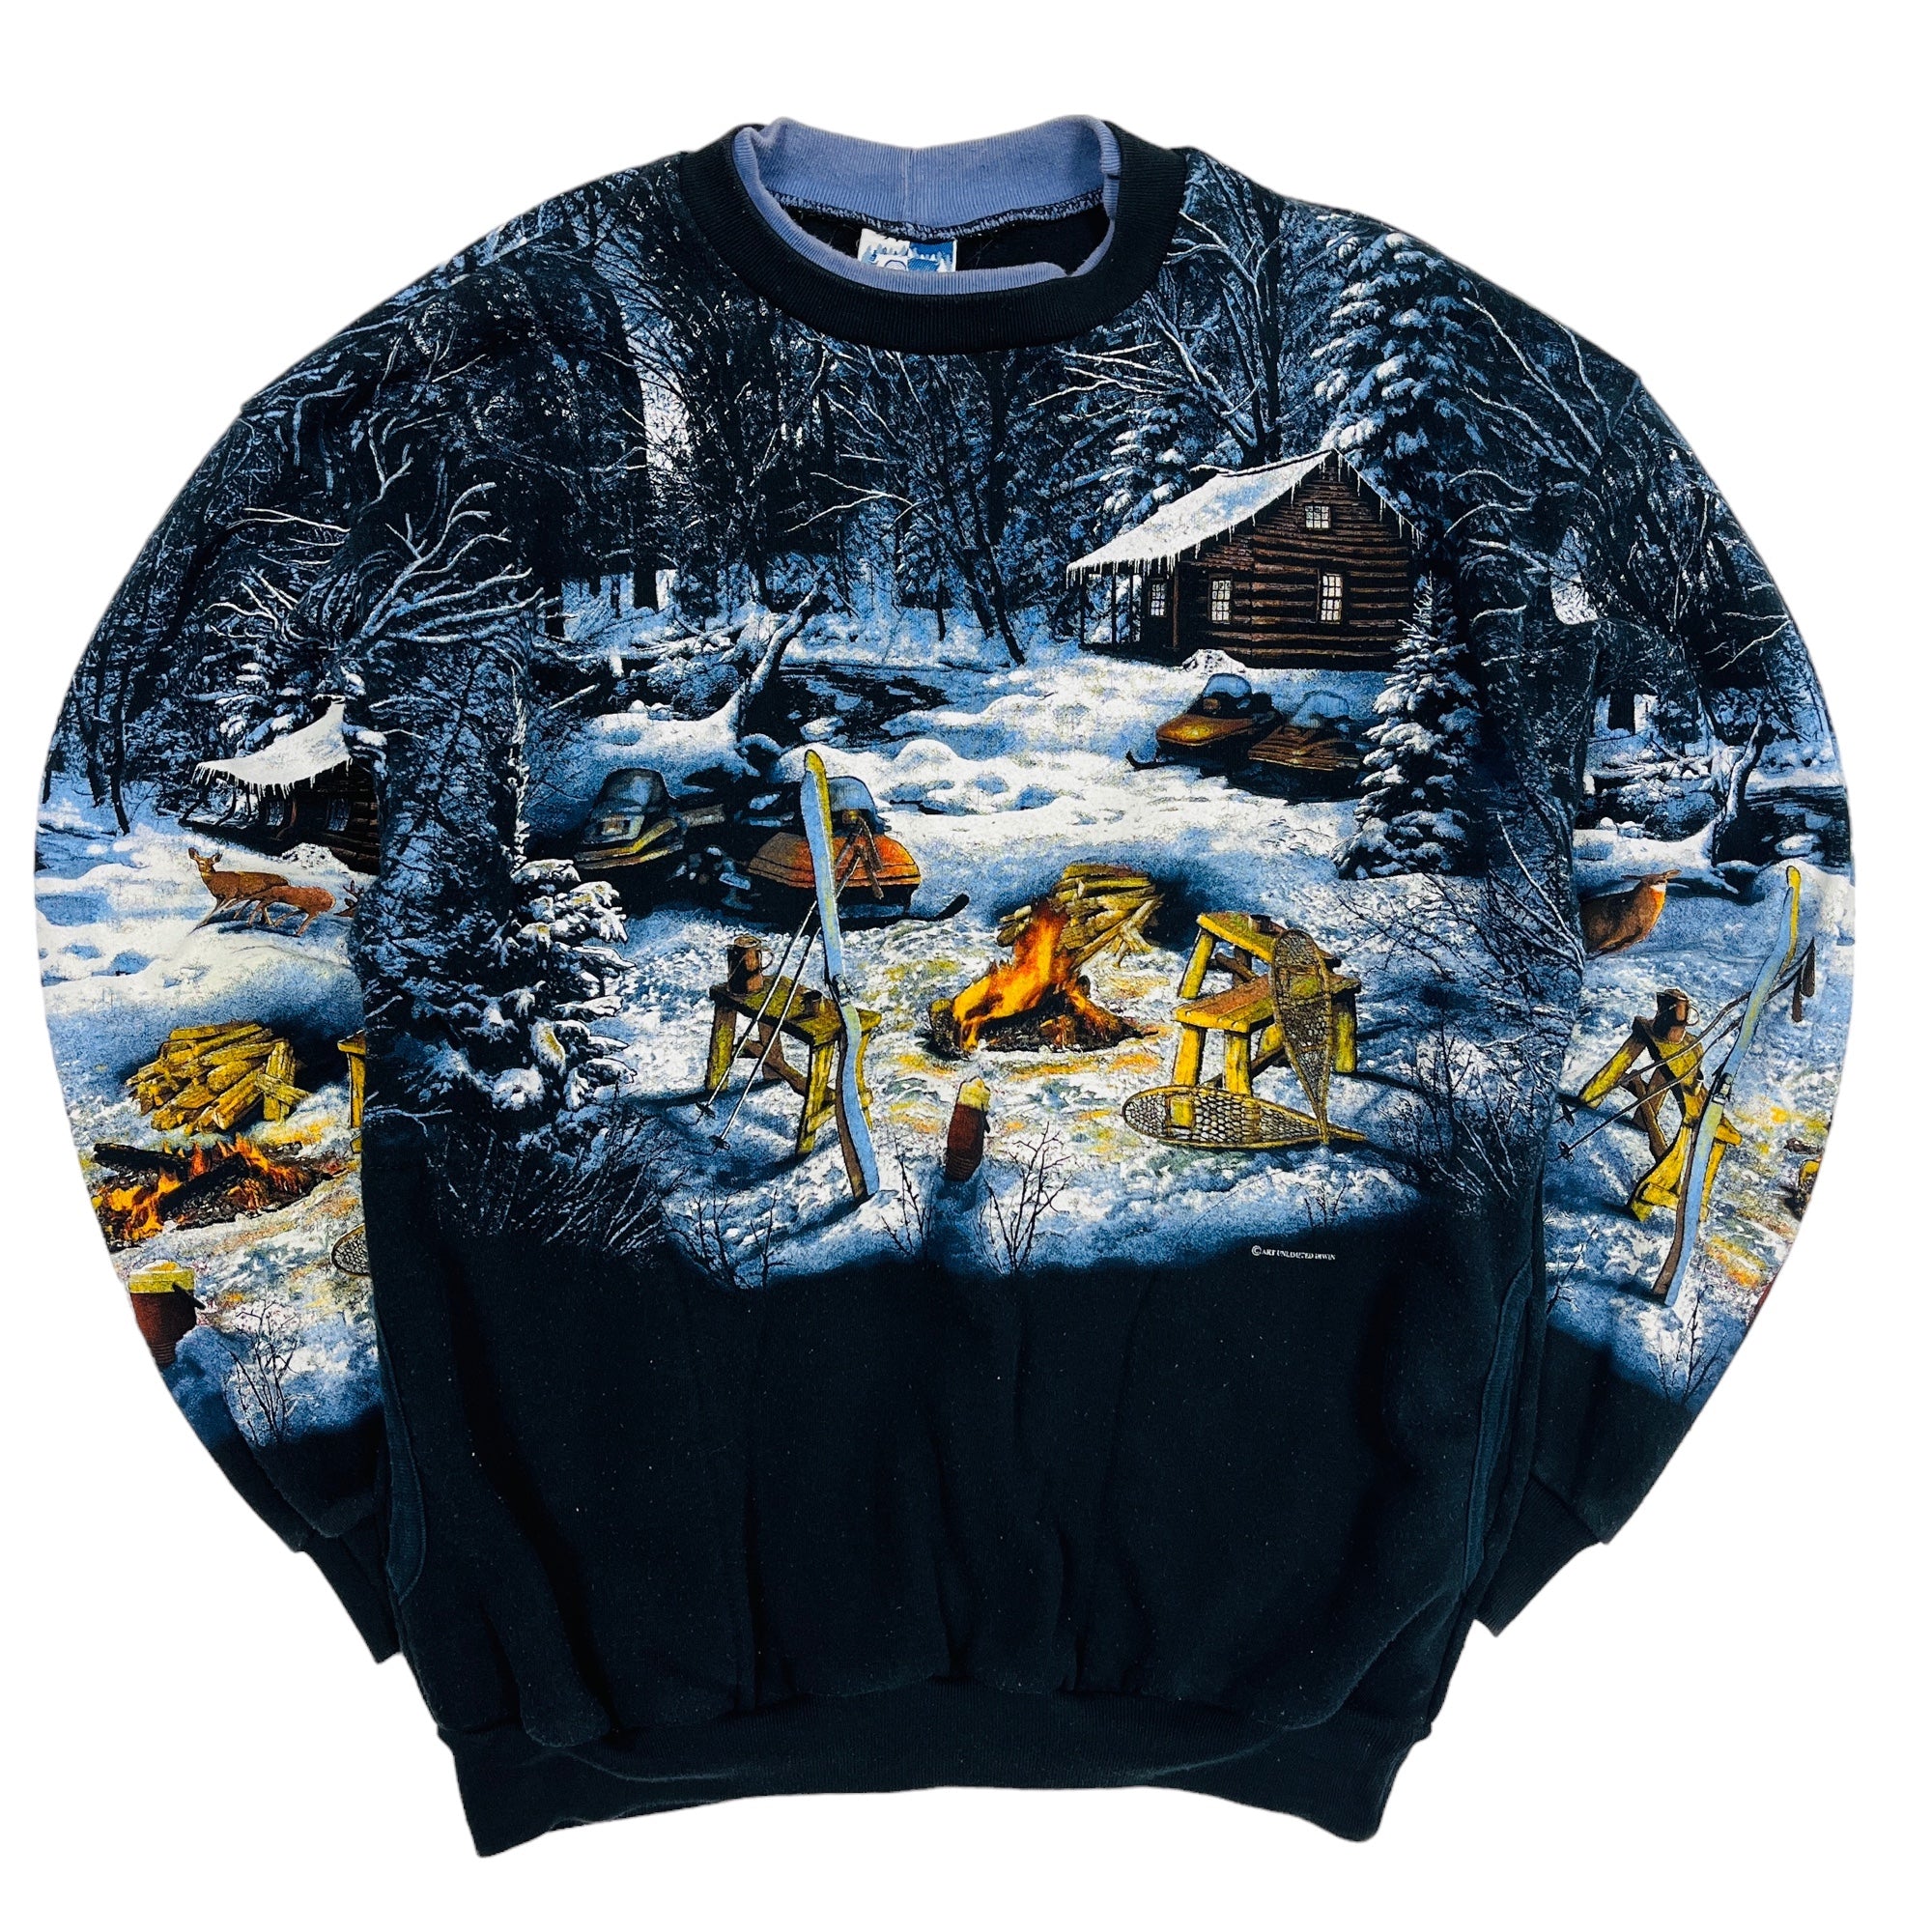 90's Winter Scene Graphic Sweatshirt - Large